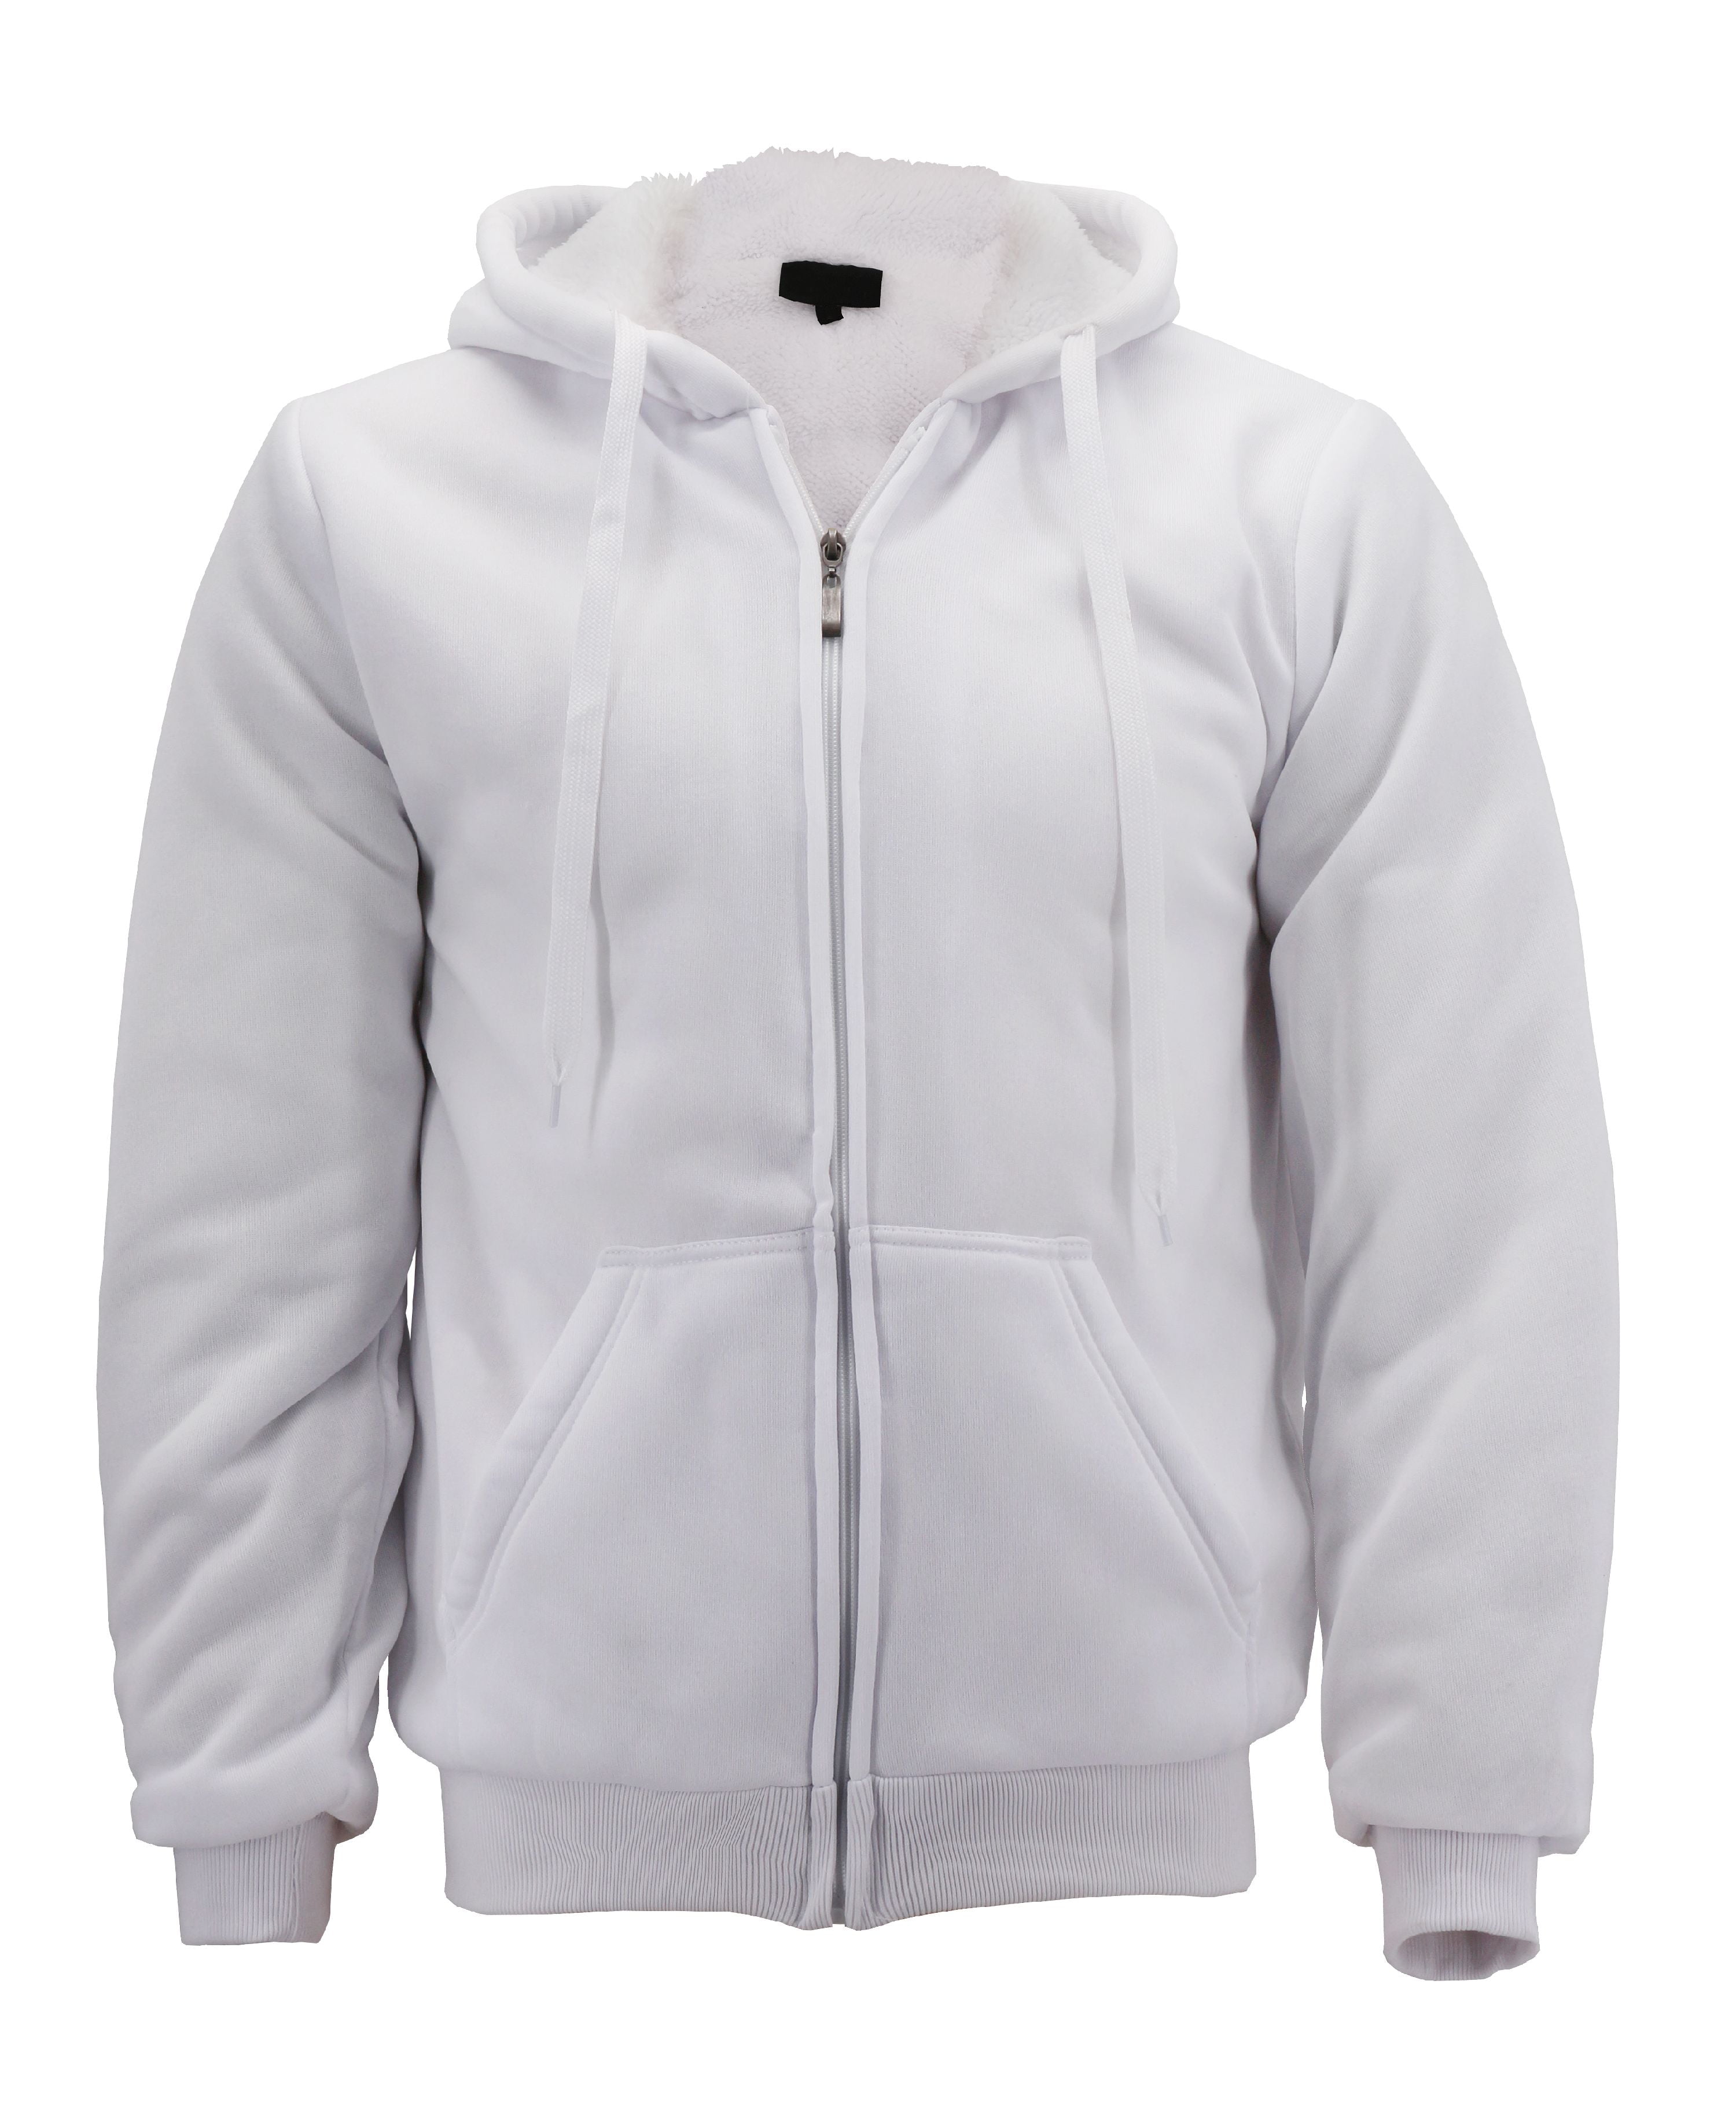 Mens Ladies Bowls Fleece Jackets Sport Uniform White Zip Up Logo Plain Pockets 